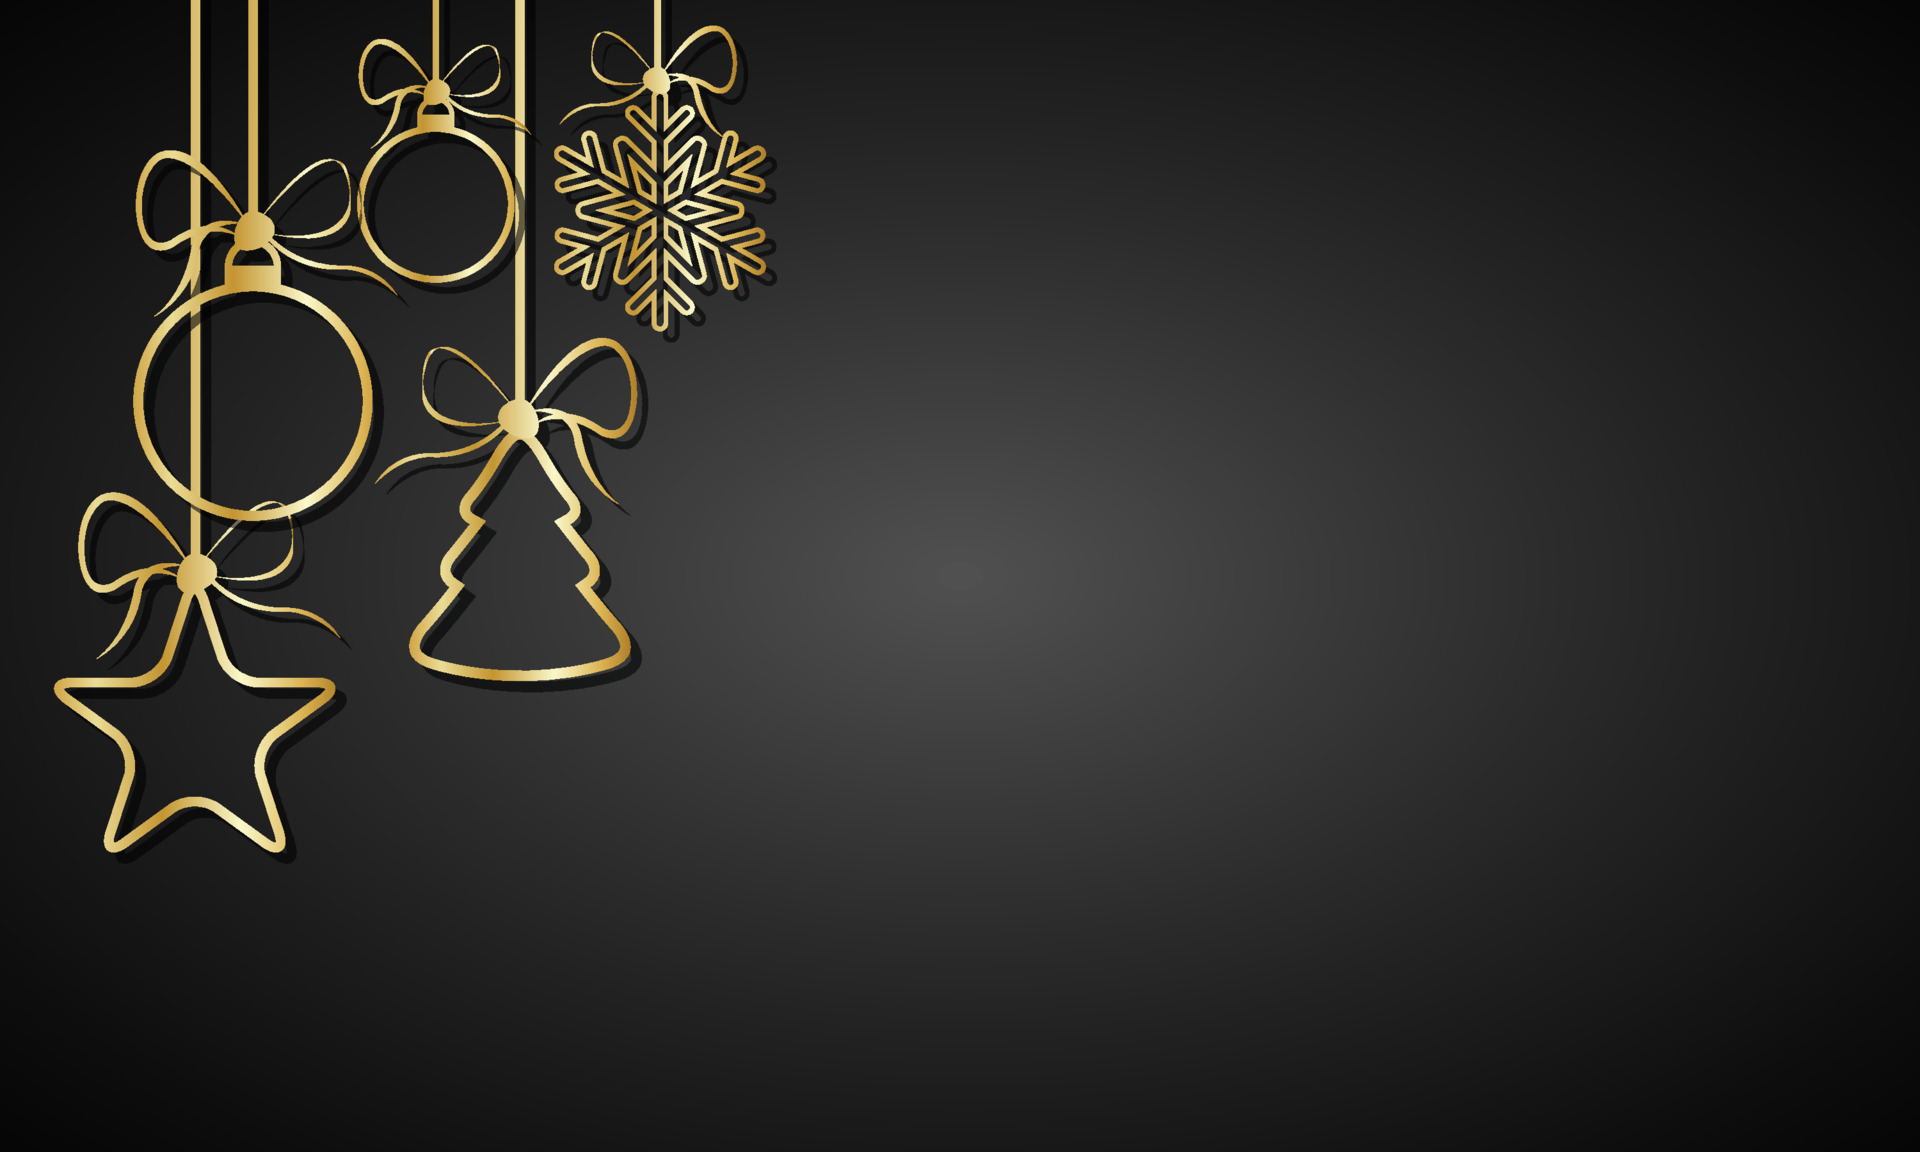 97 + Background Christmas Black Gold Images - MyWeb